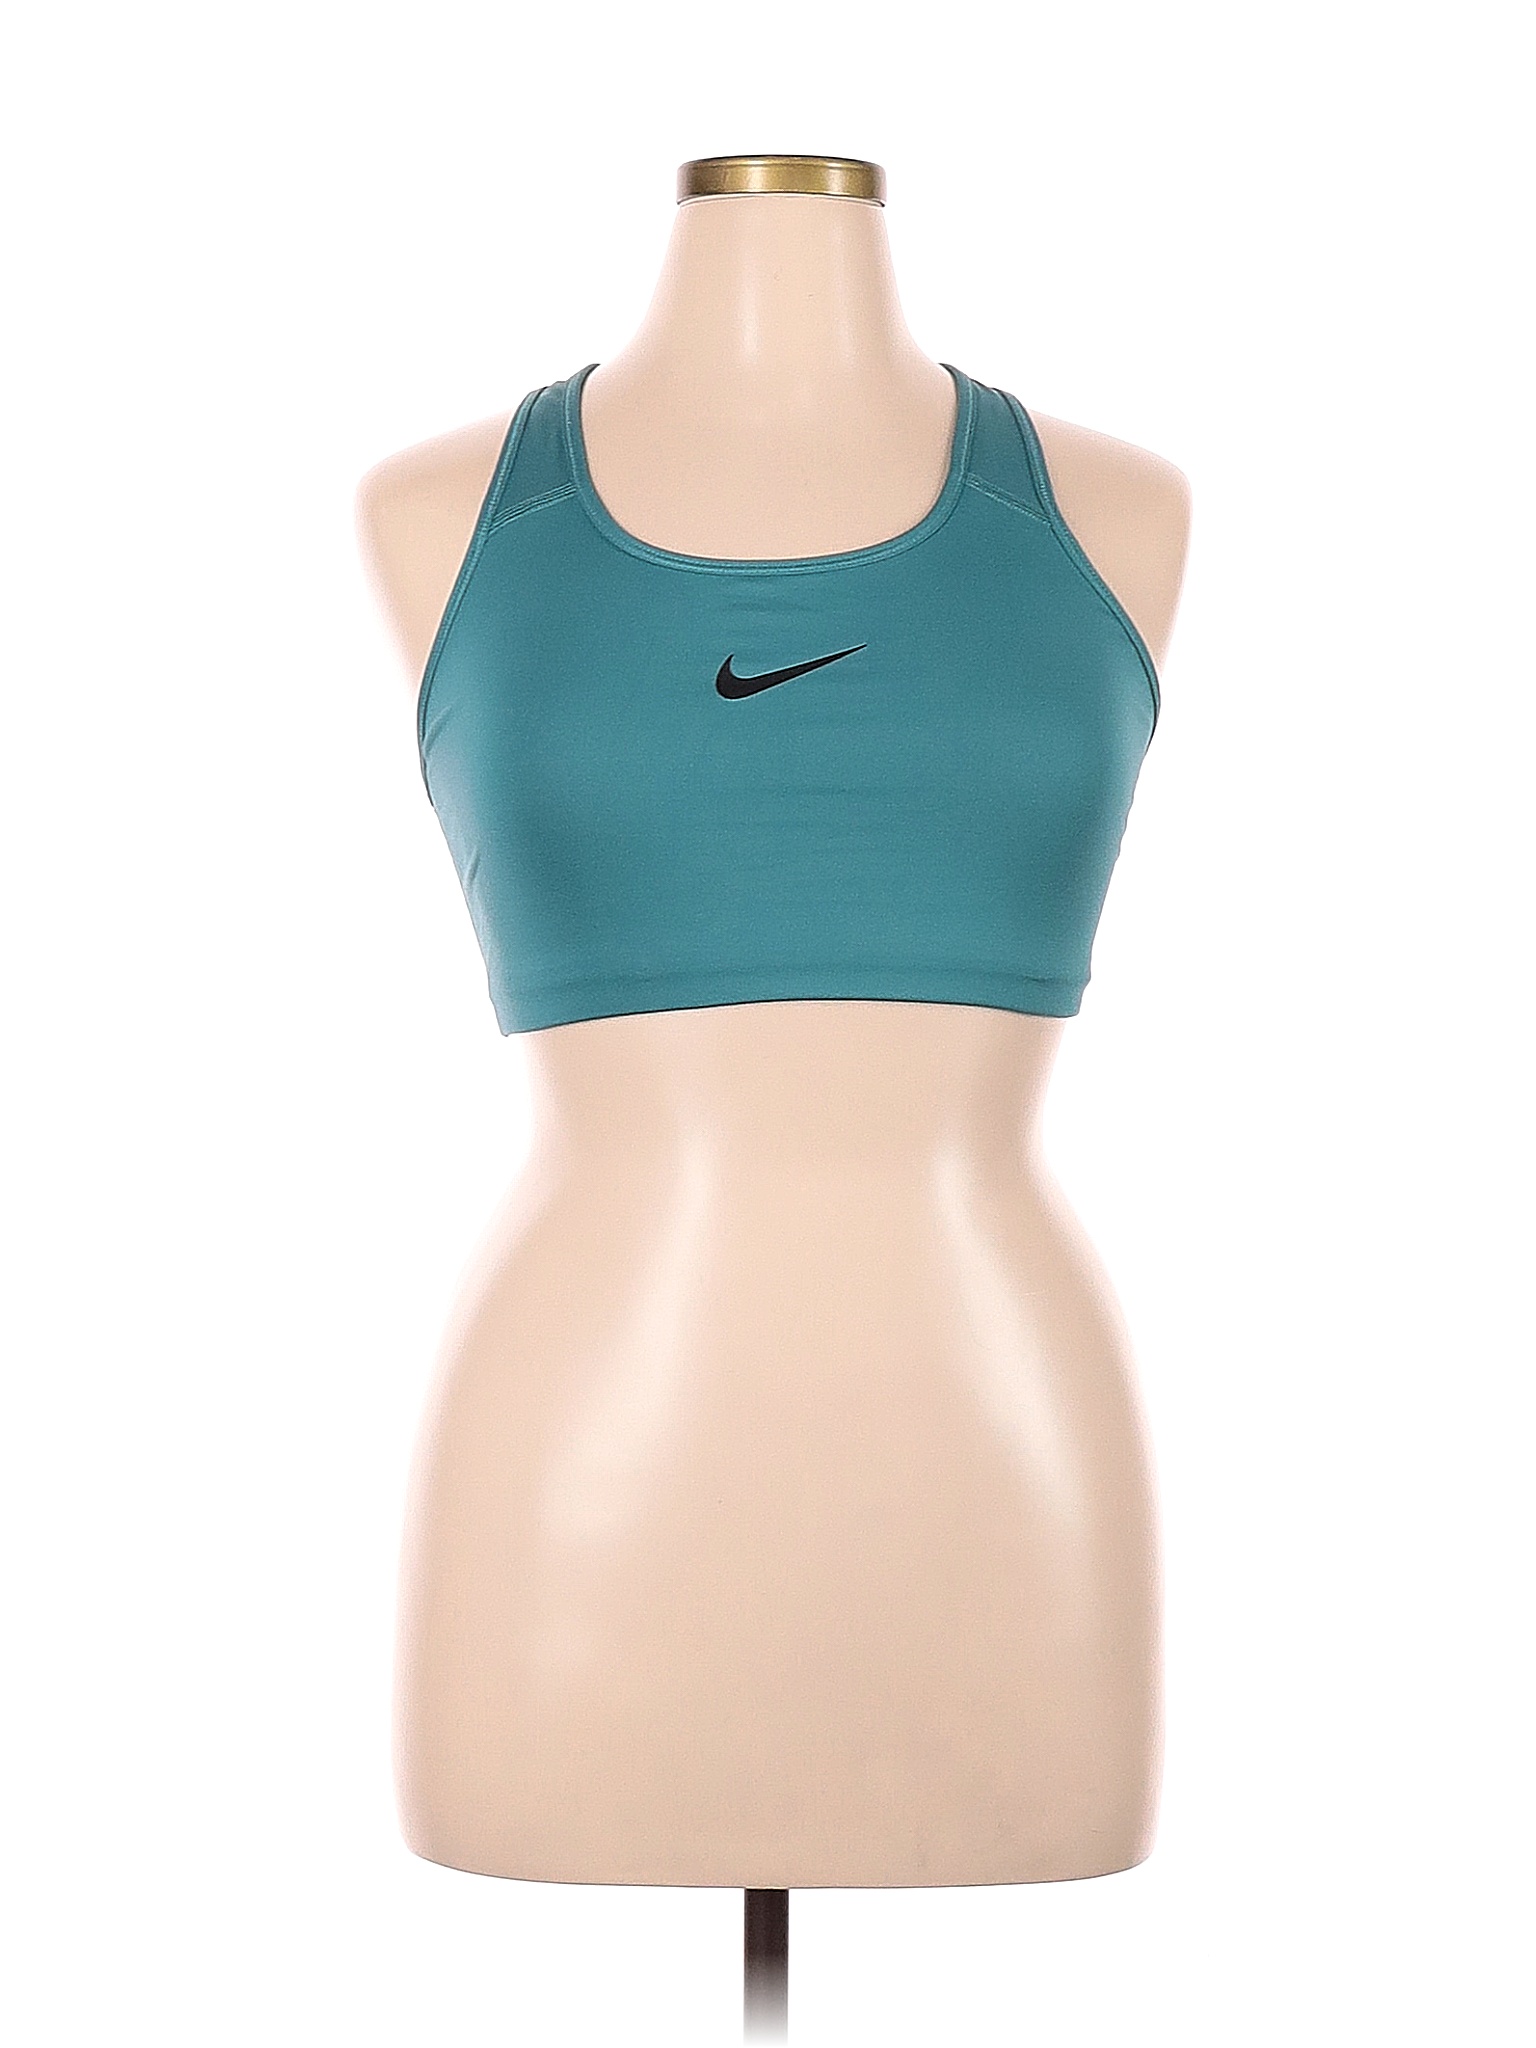 Nike Teal Sports Bra Size XL - 43% off | thredUP